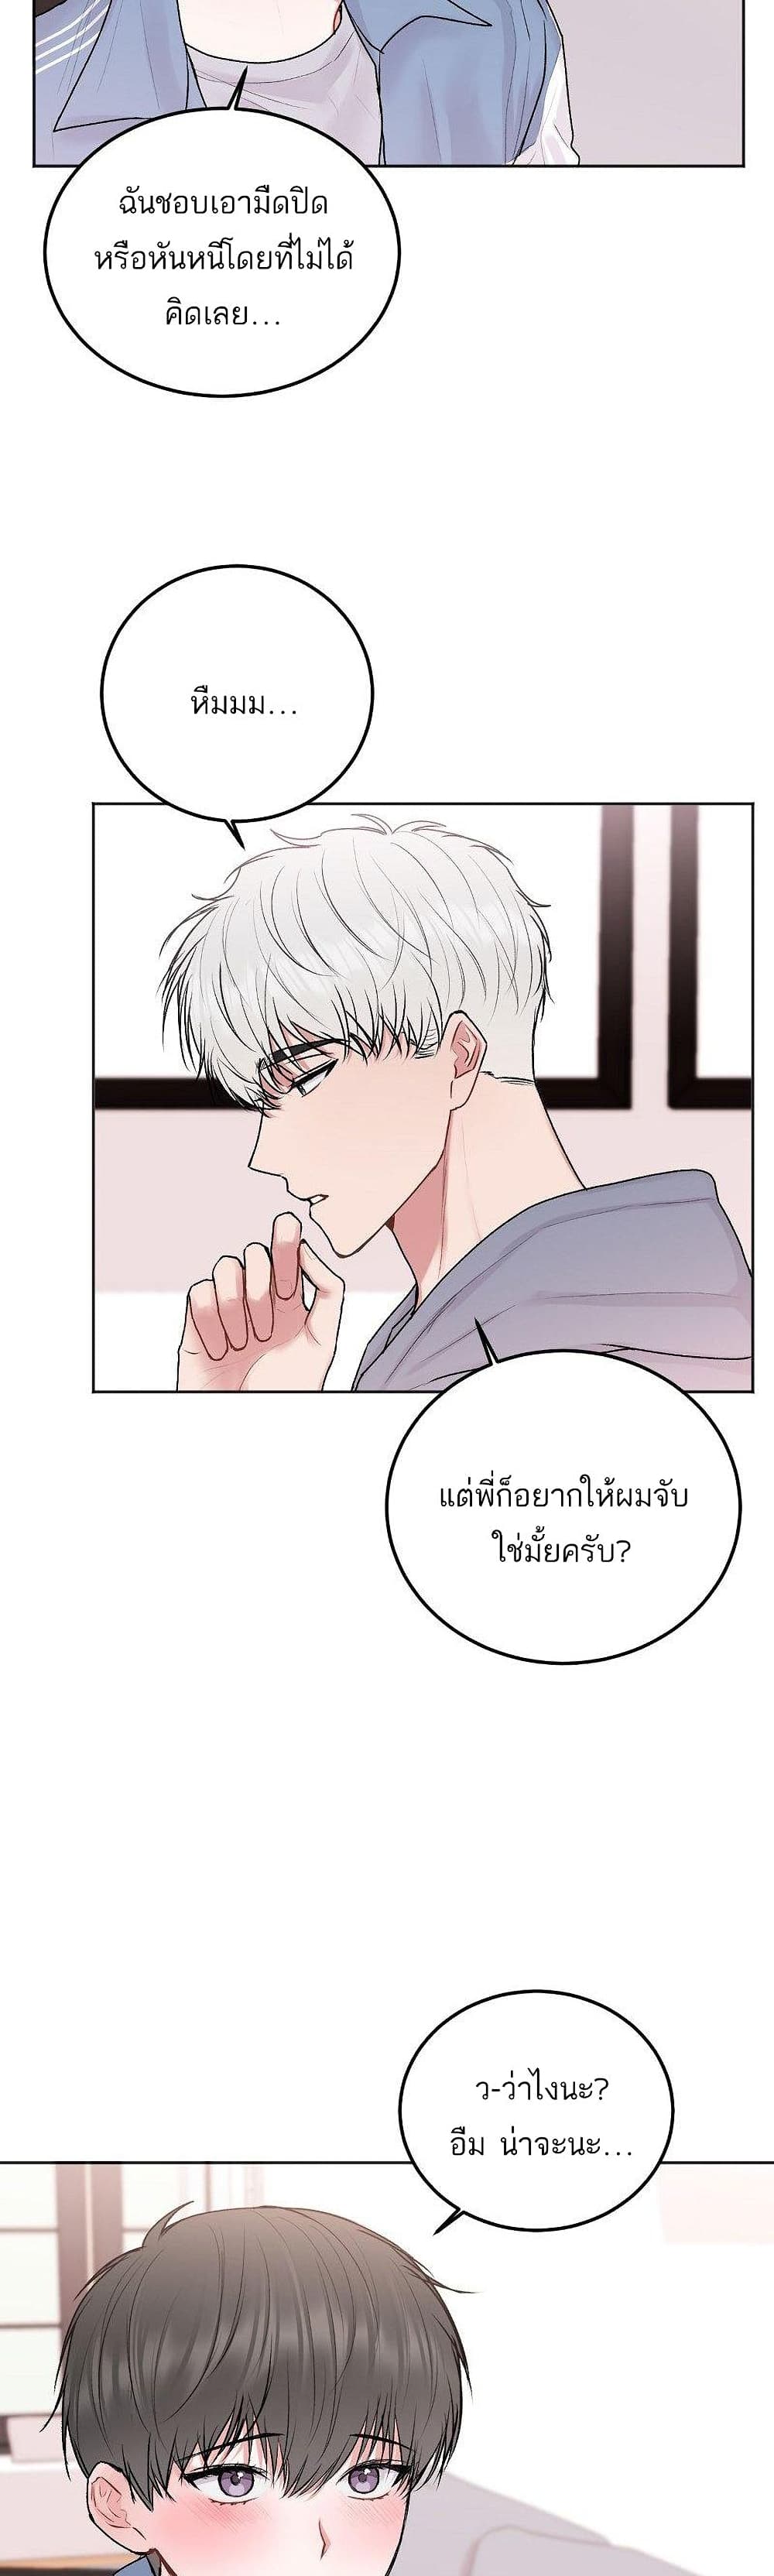 Don't cry sunbae 31 29